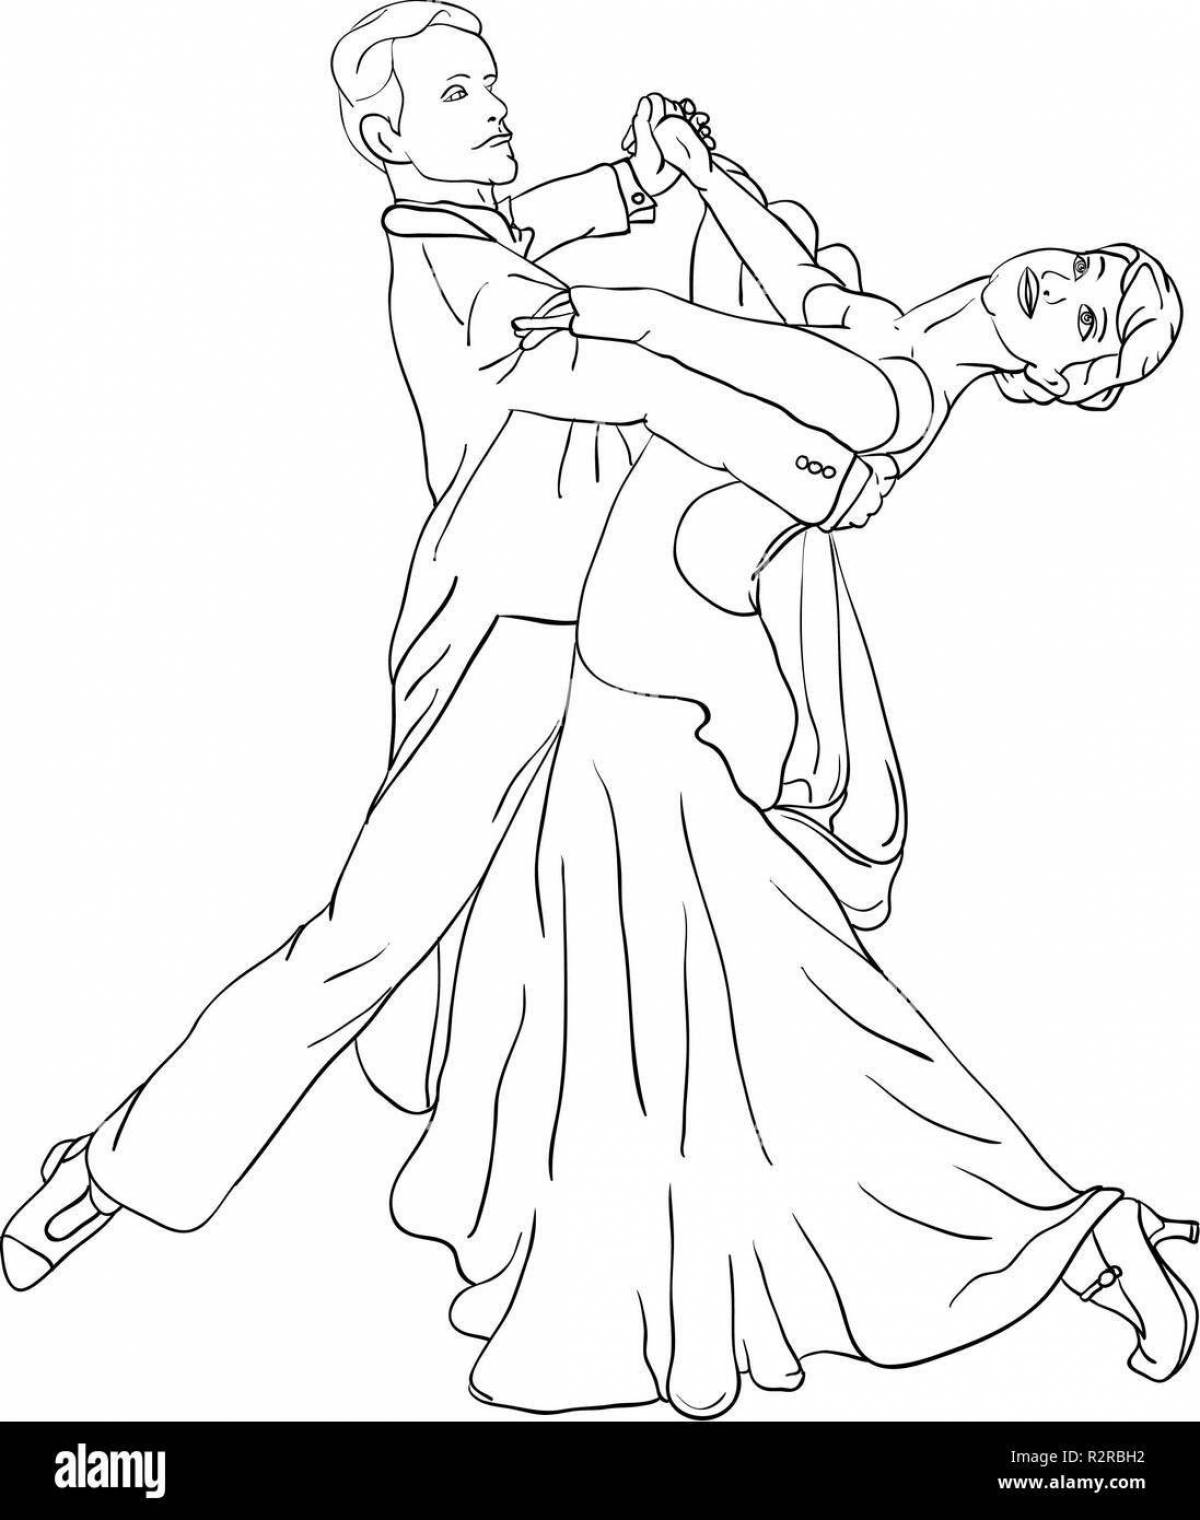 Energetic movements in ballroom dancing